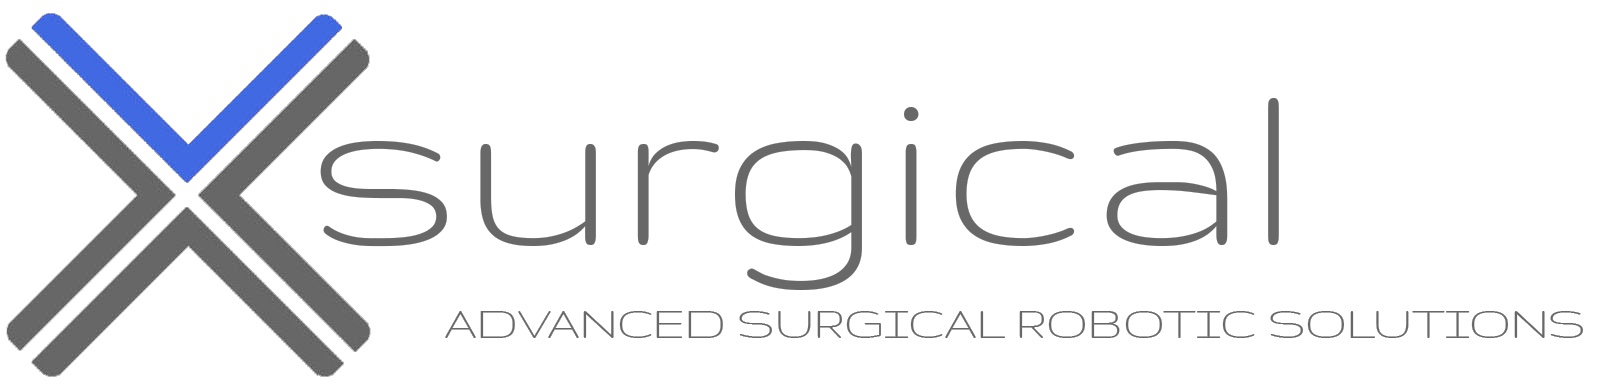 Xsurgical logo (1).jpg